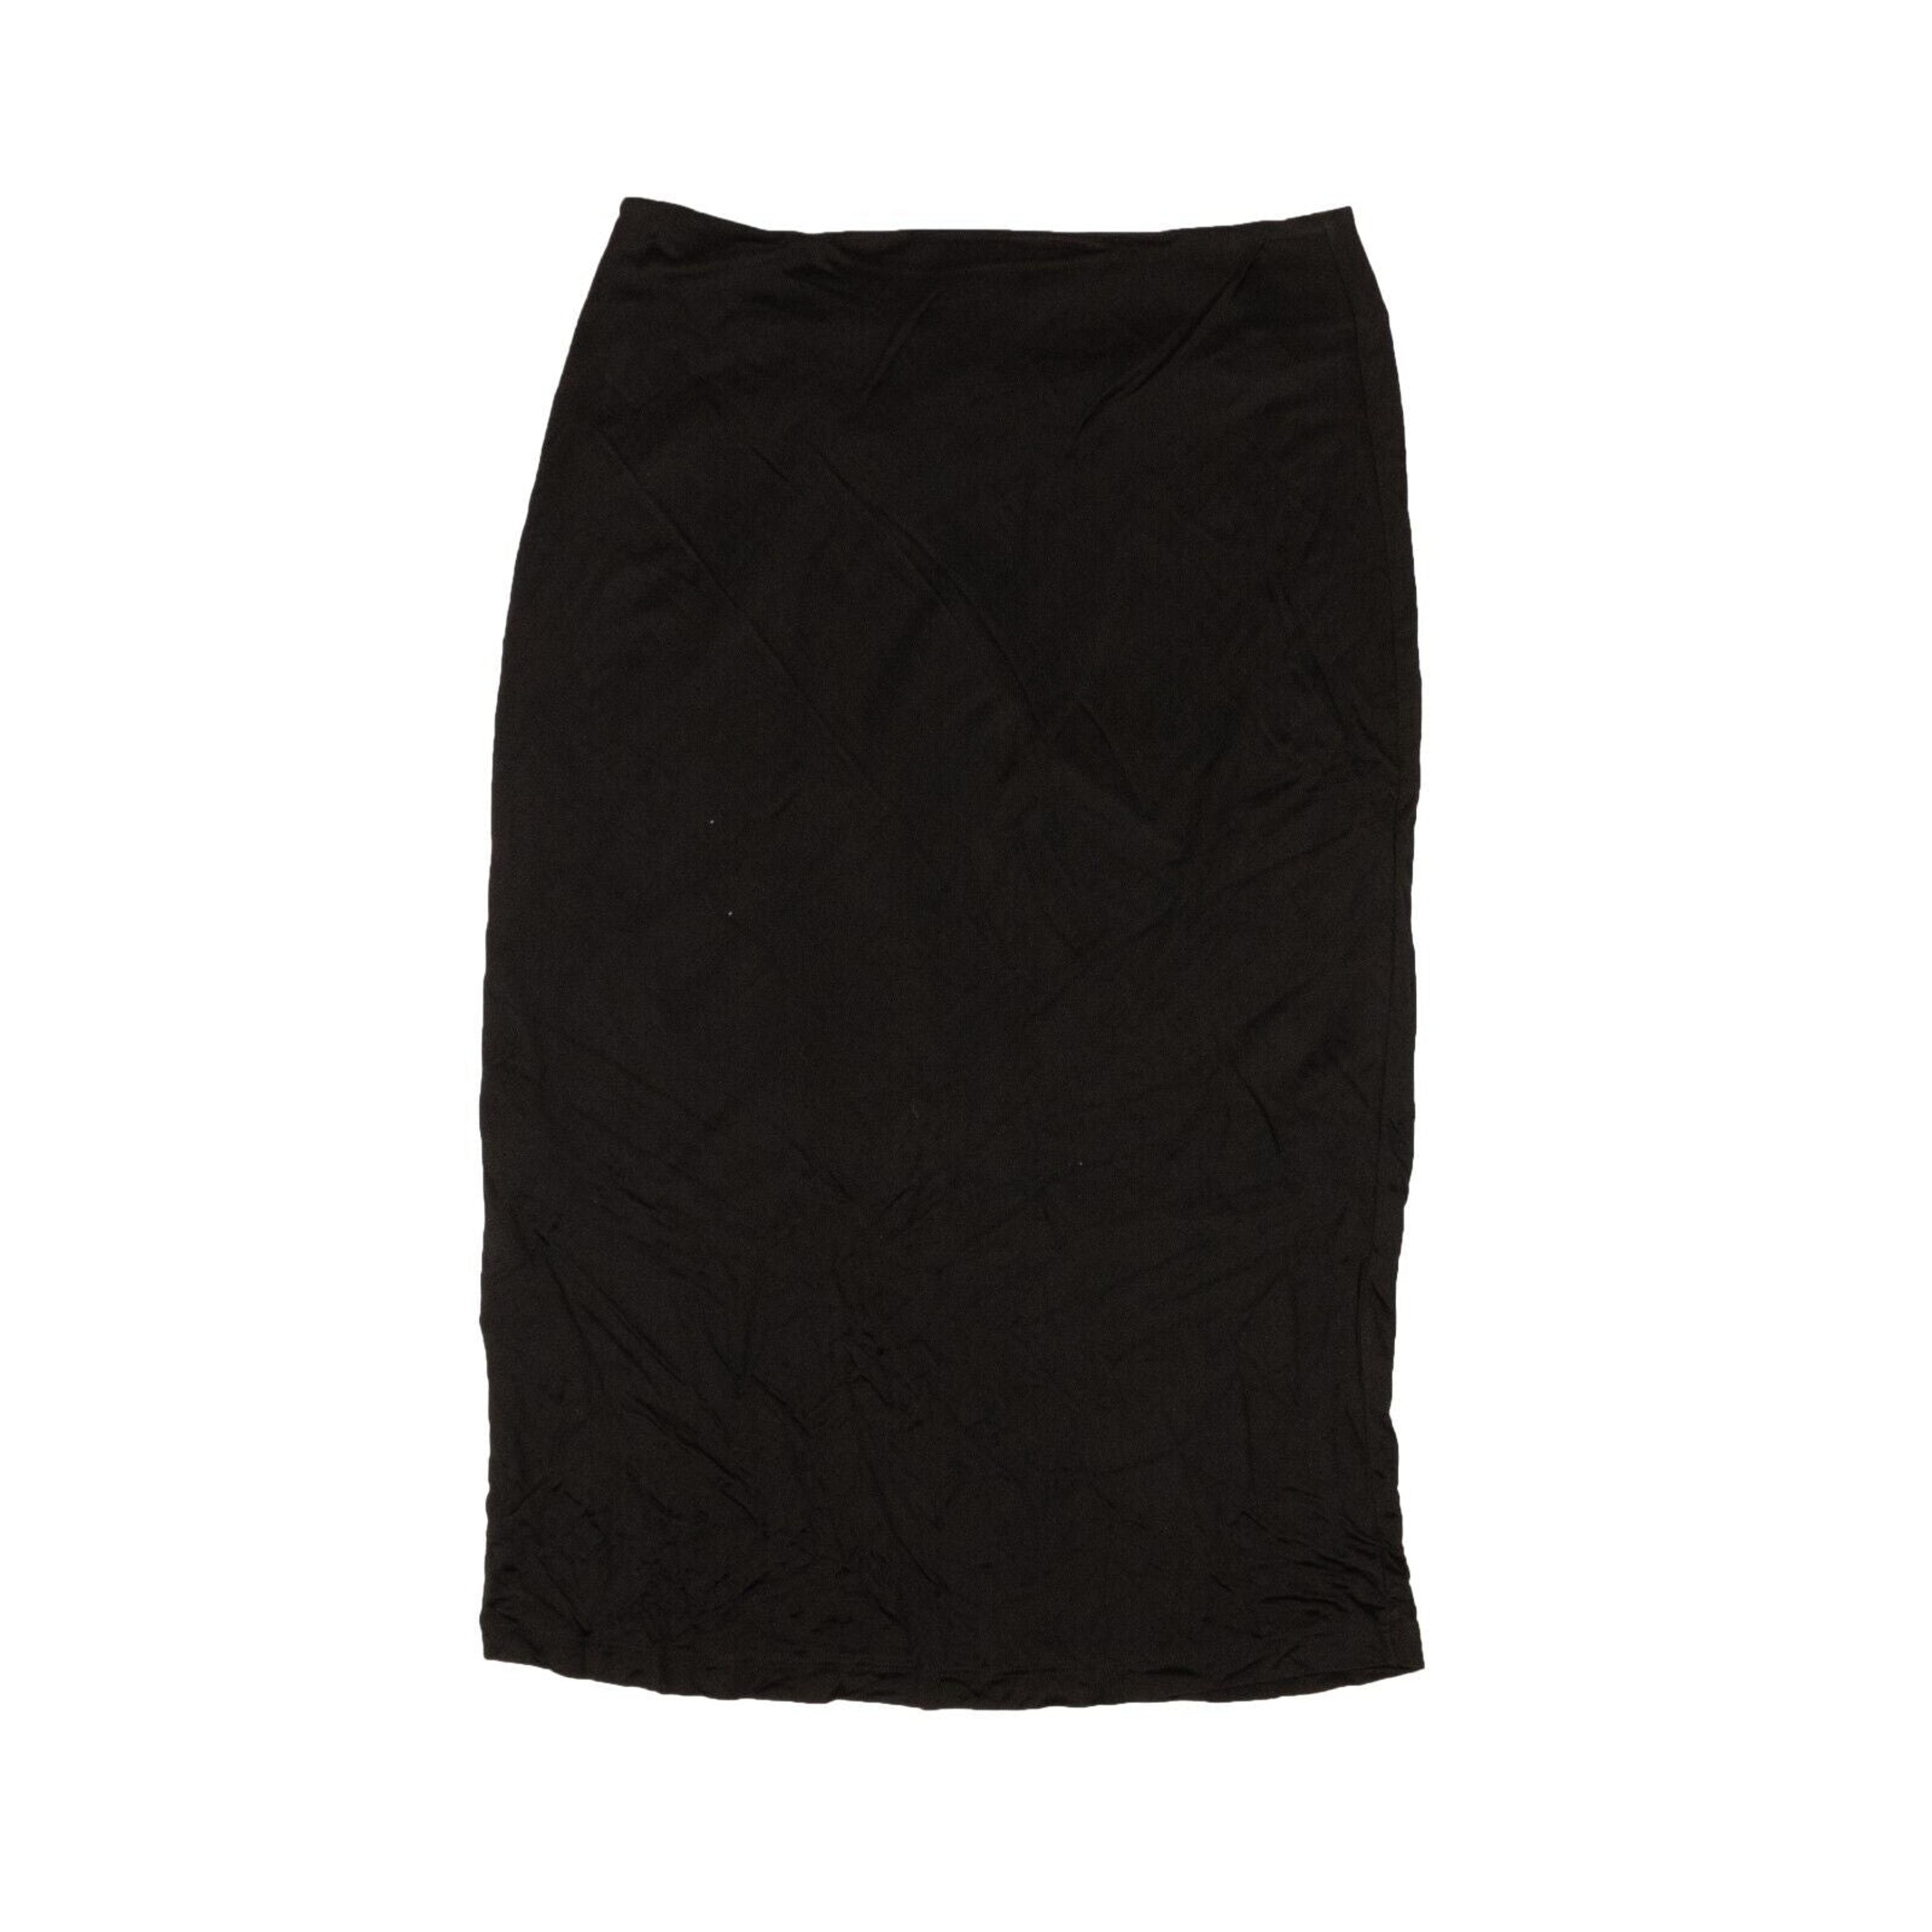 Alternate View 2 of Black Polyester Keyhole Flare Skirt